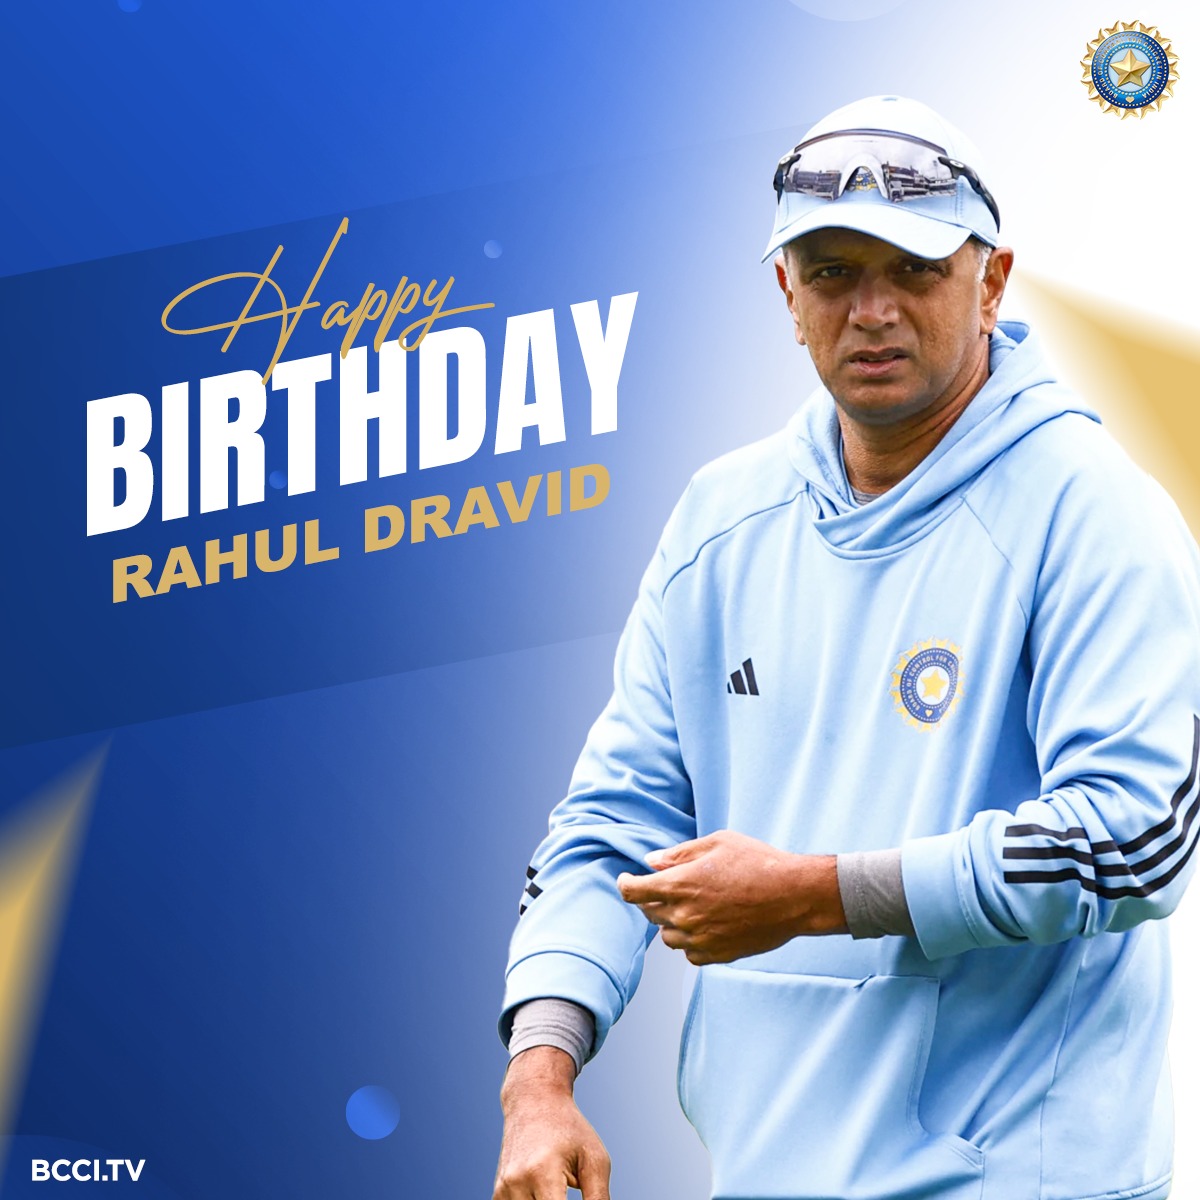 509 intl. matches 👏 24,208 intl. runs 👌 4⃣8⃣ intl. hundreds 💯 Here’s wishing Rahul Dravid - Former #TeamIndia Captain and present Head Coach of India (Men's team) - a very Happy Birthday 🎂👏